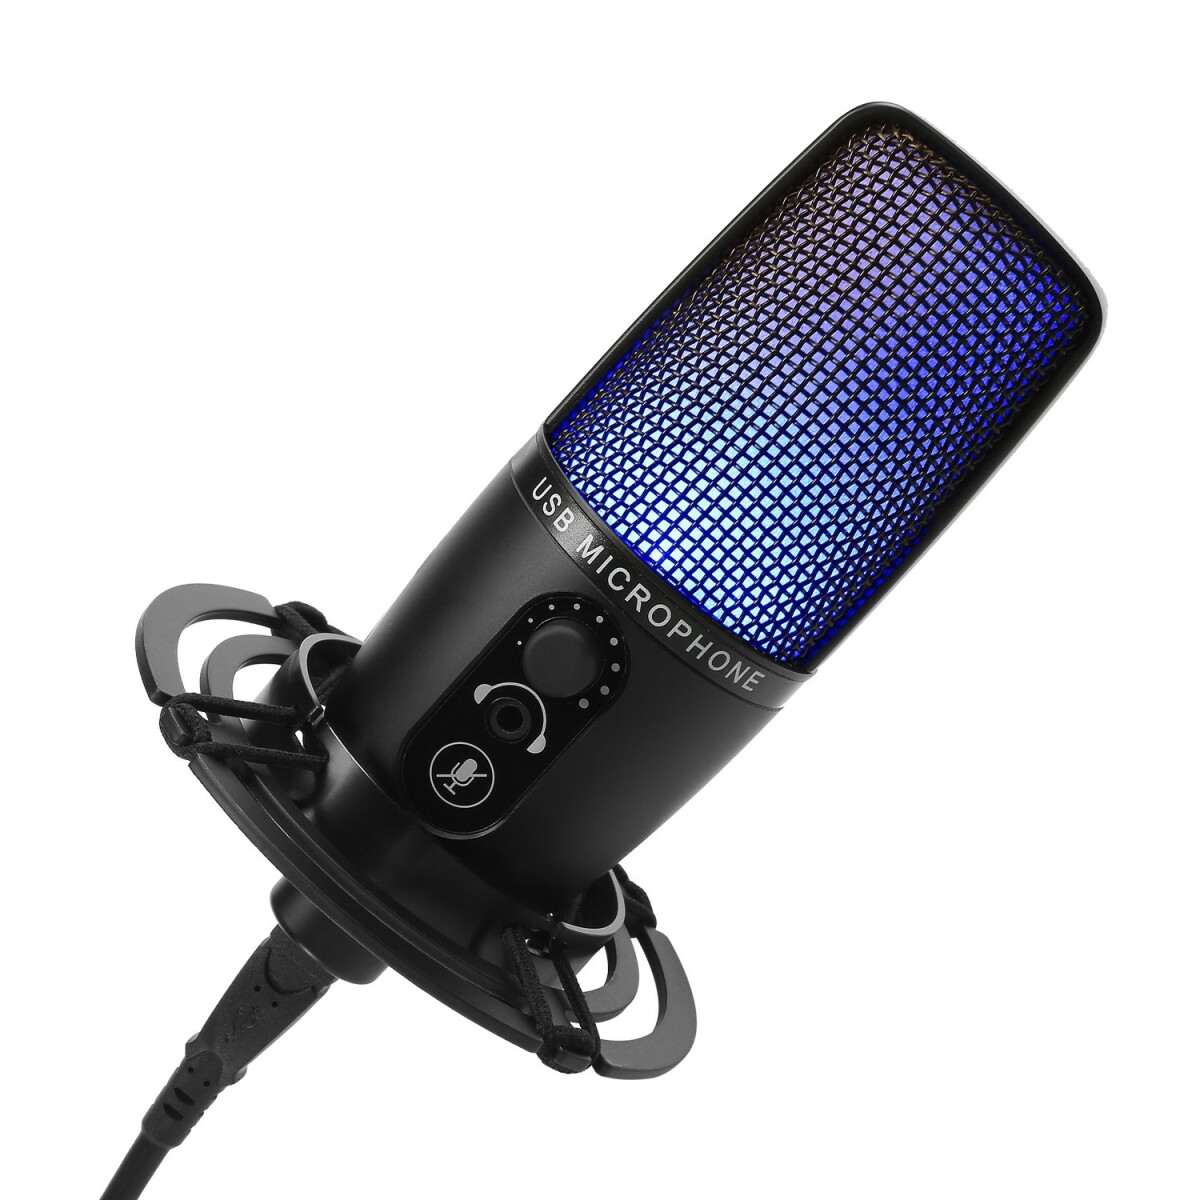 Gear4 - Kit Microphone RGB Professionel GEAR4U Streaming USB, Micro de  Studio avec Support de Bras Filtre Anti-Pop pour Streamer - Microphone PC -  Rue du Commerce